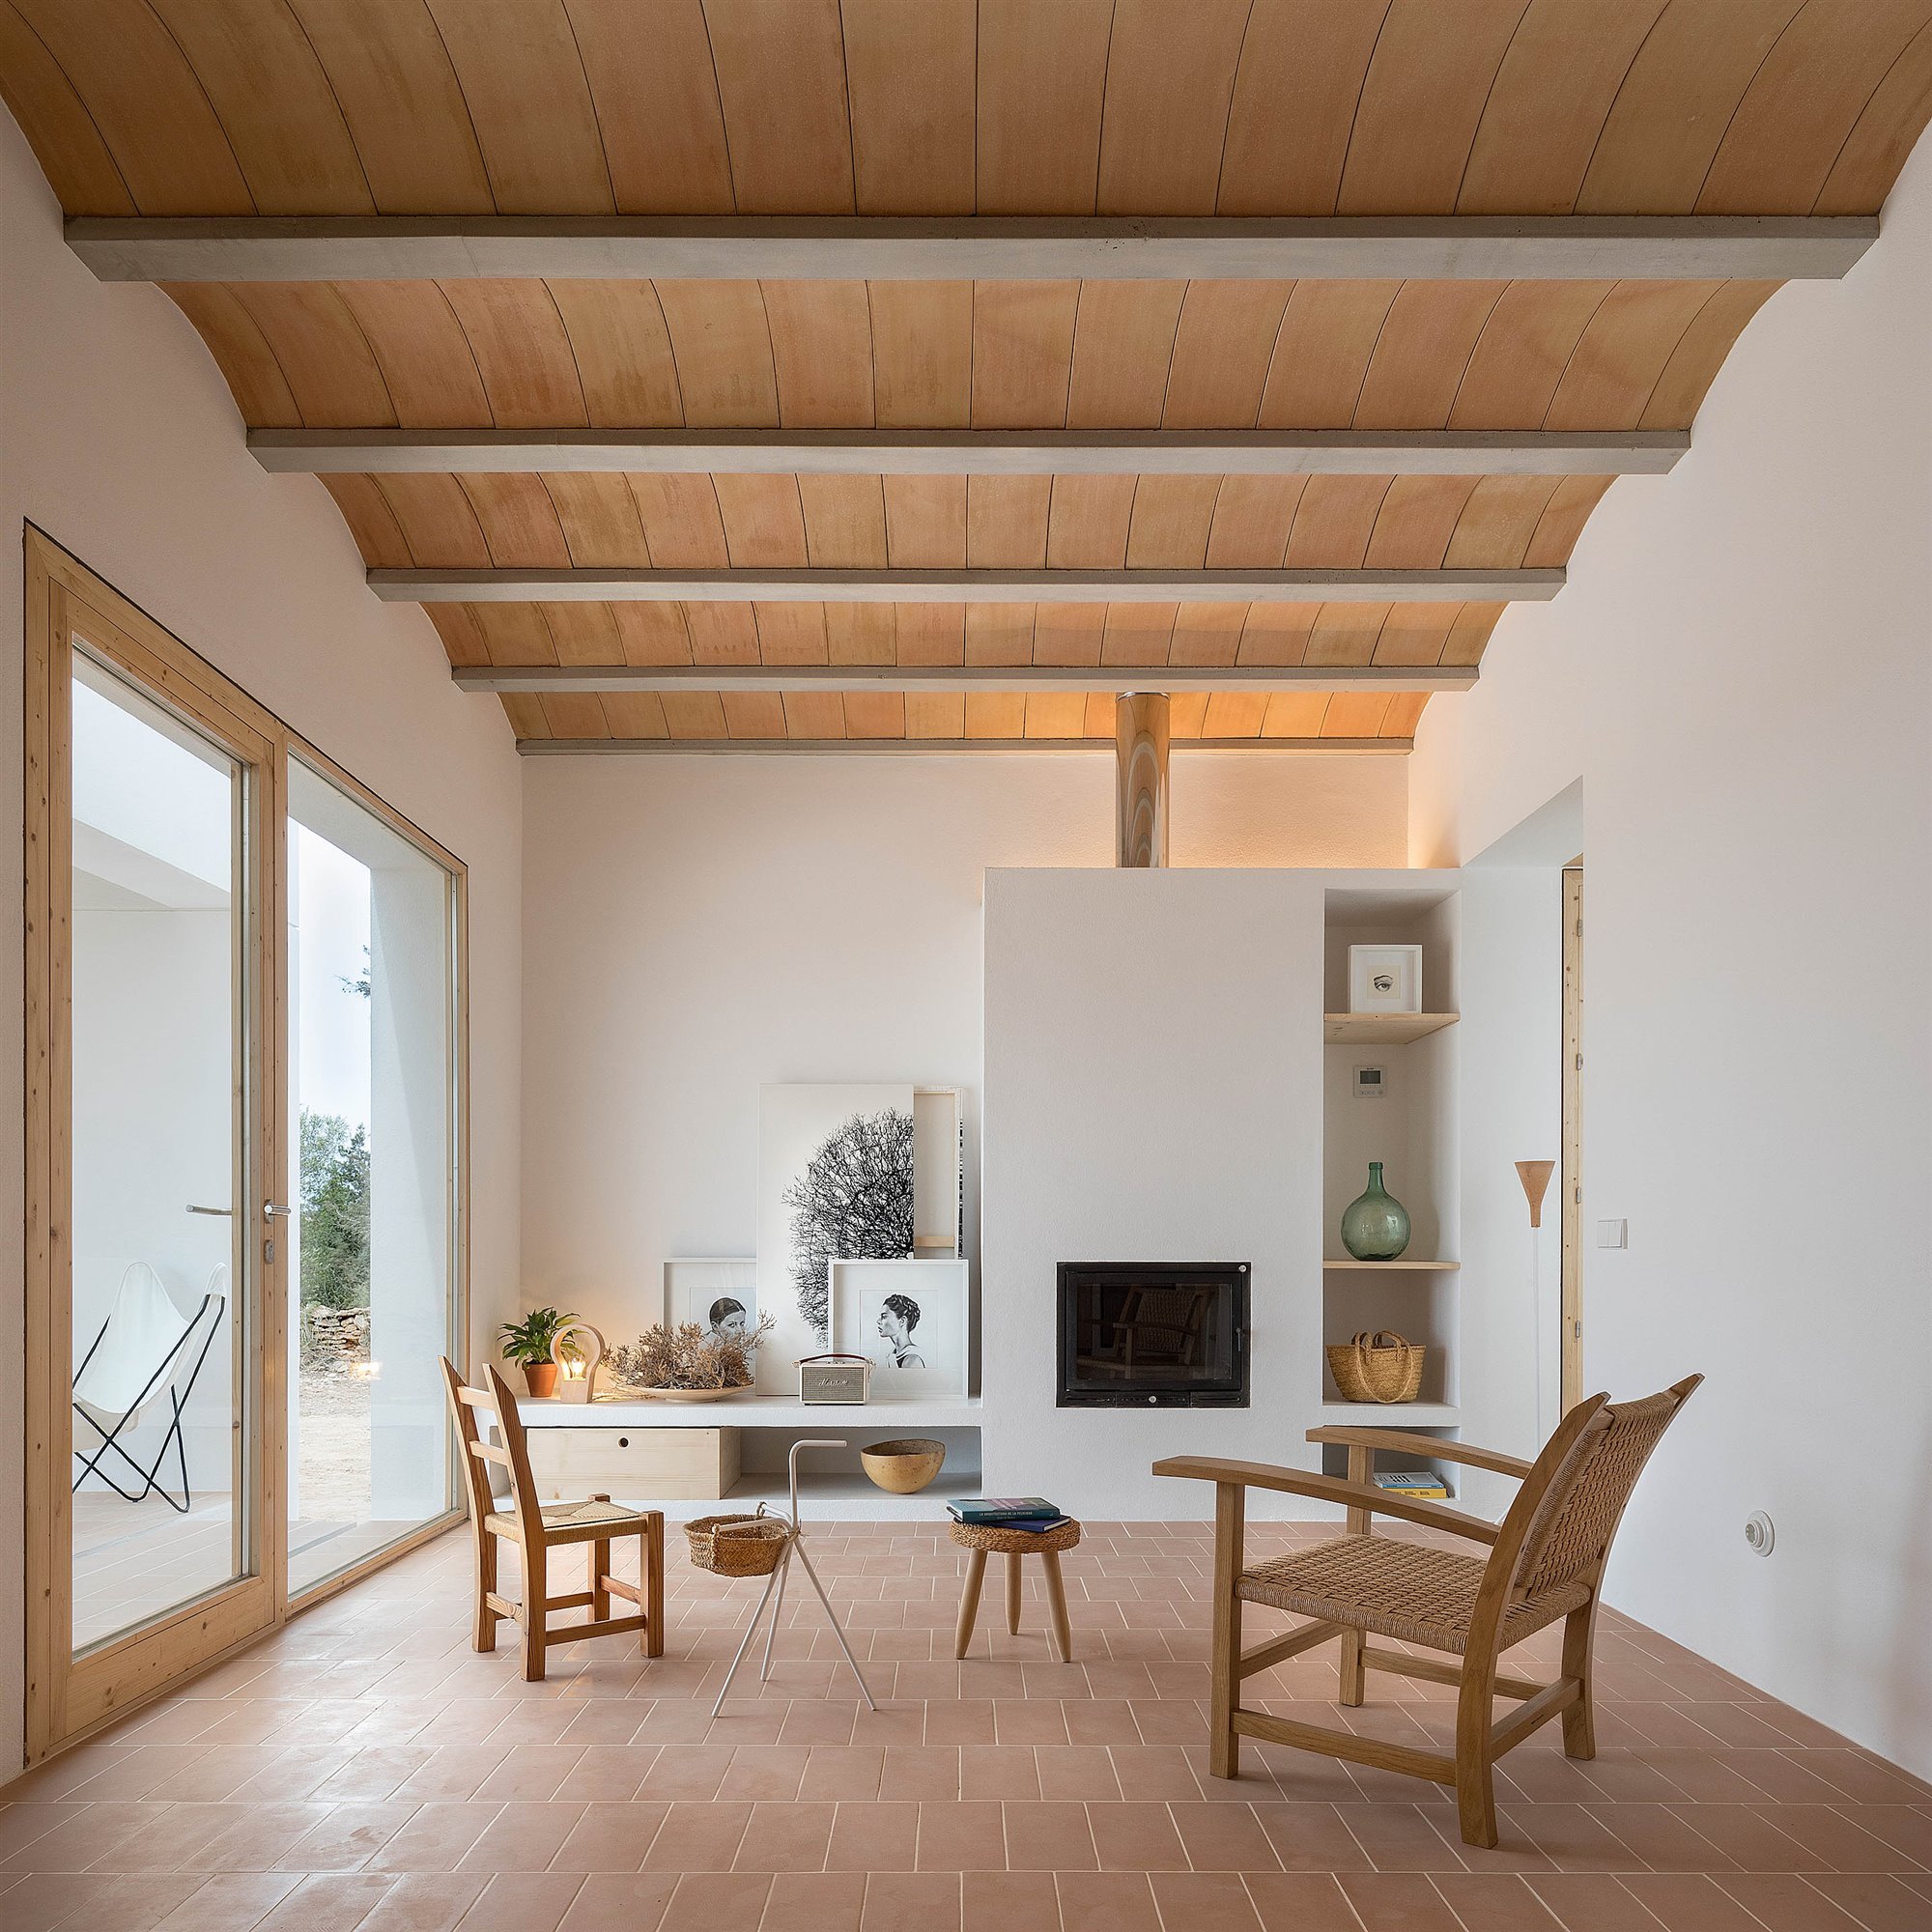 Casa blanca en Formentera del arquitecto Maria Castello salon con volta catalana